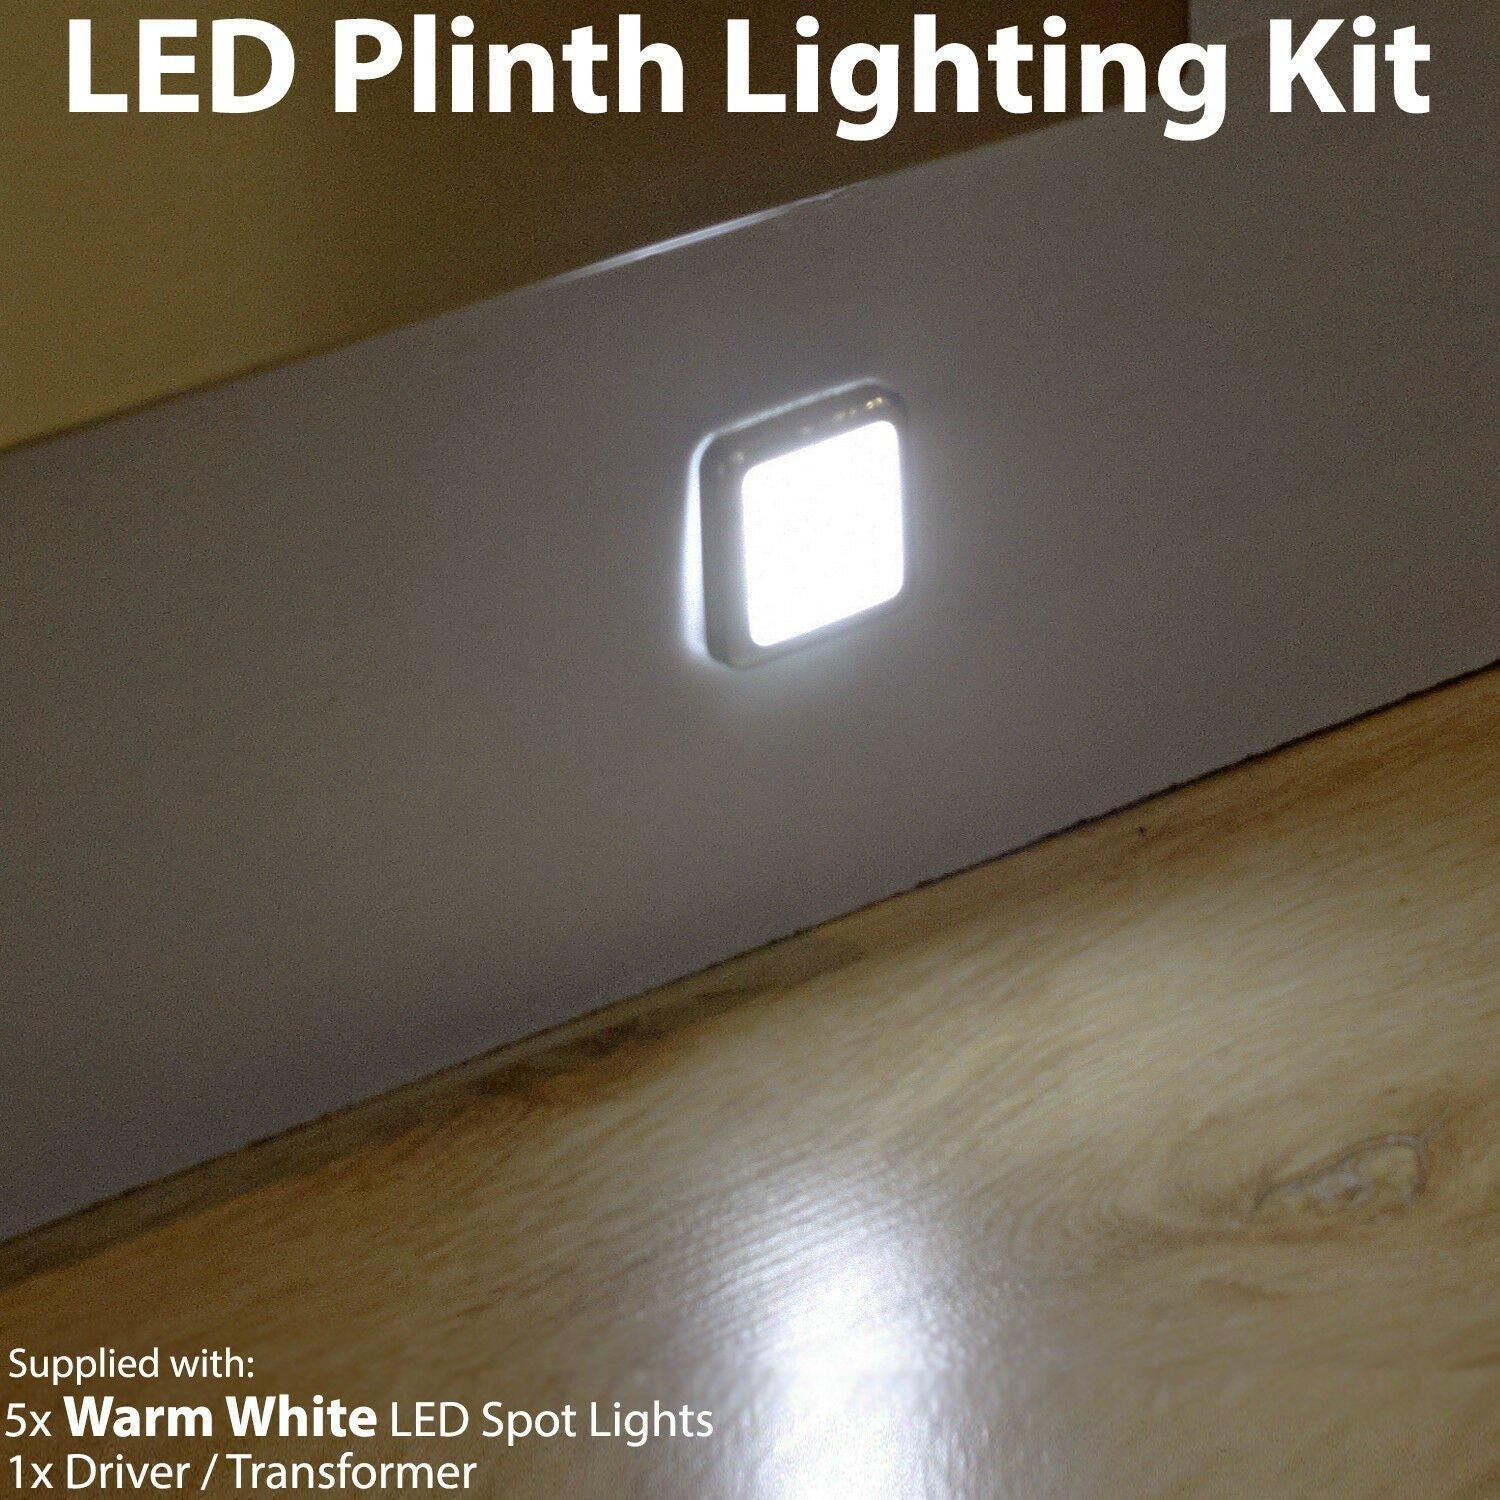 Square LED Plinth Light Kit 5 WARM WHITE Spotlights Kitchen Bathroom Floor Panel - image 1